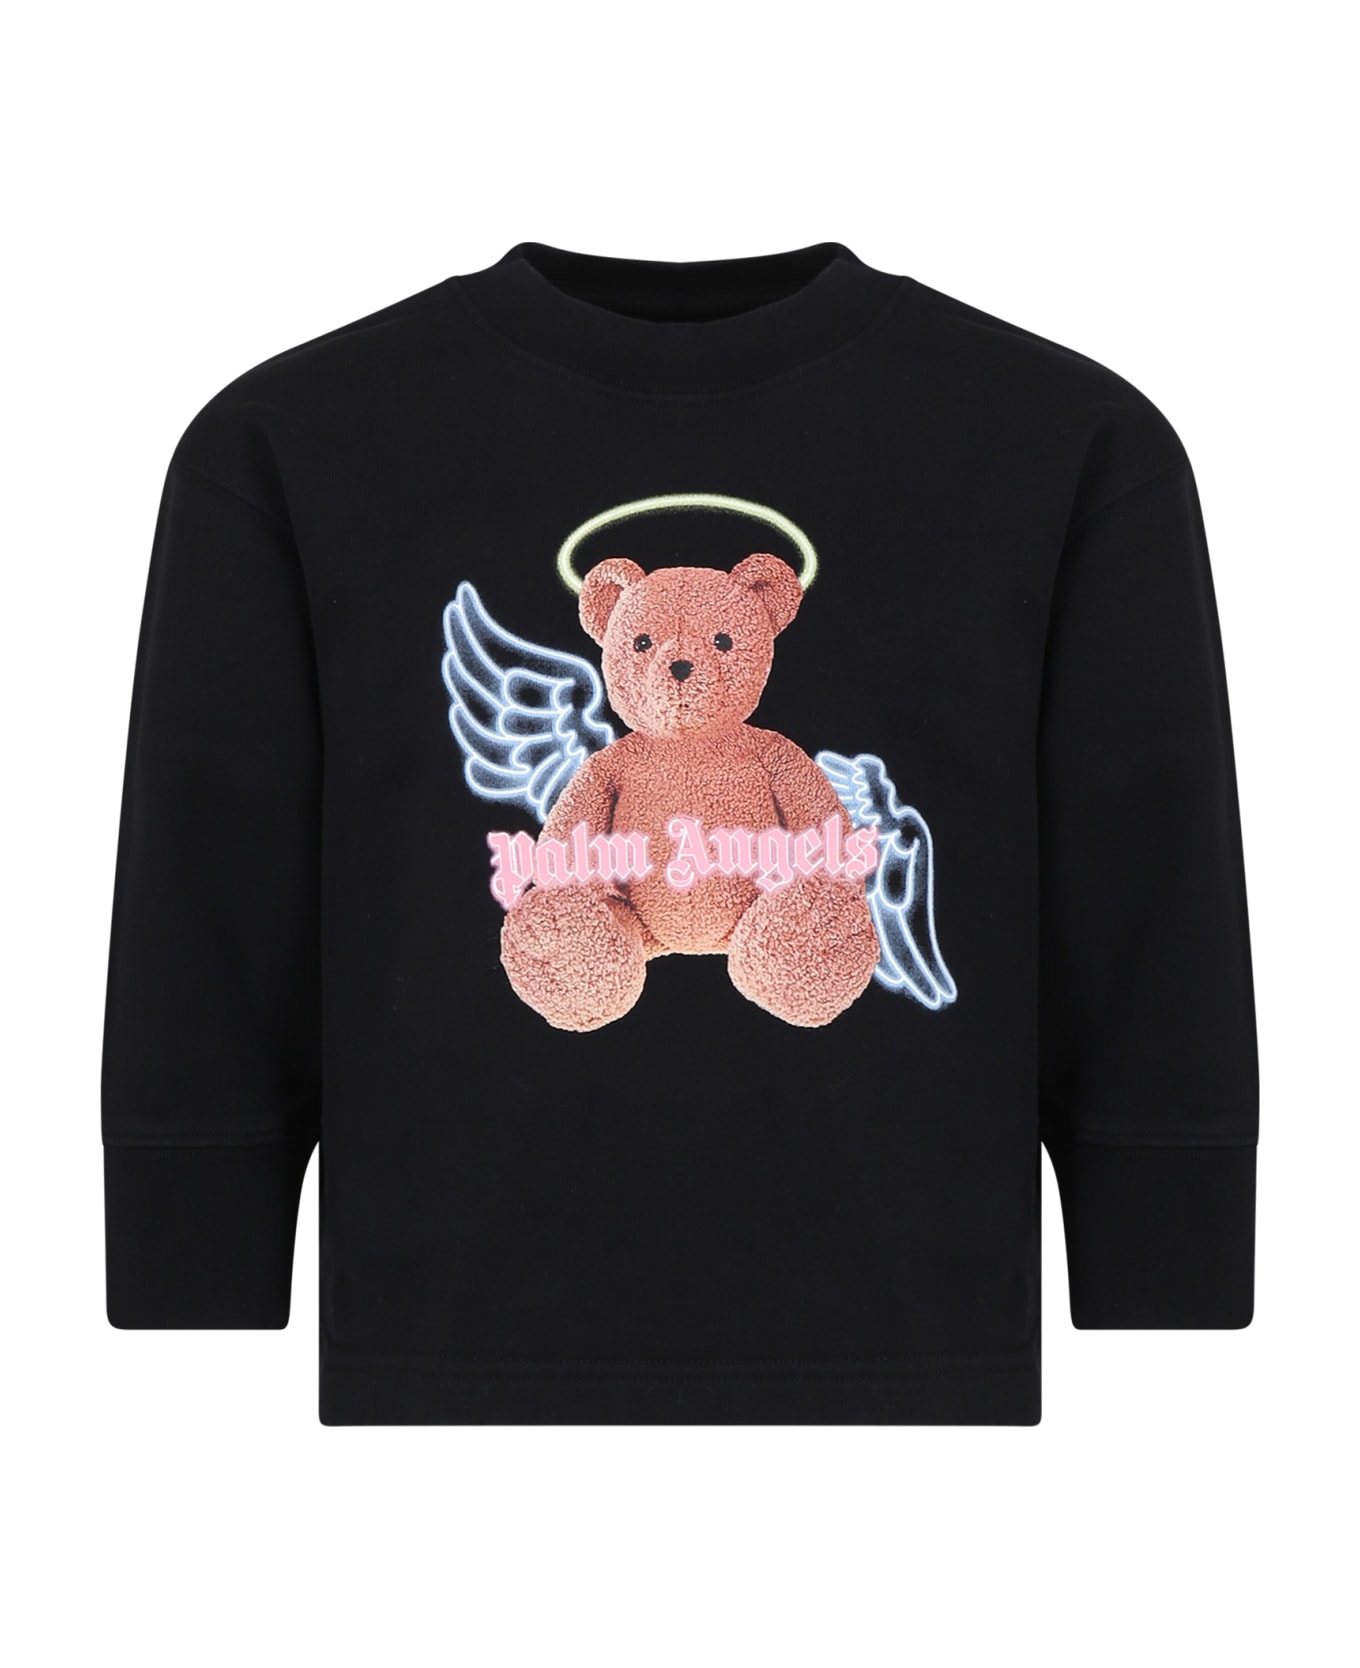 Palm Angels Black Sweatshirt For Girl With Bear - Black